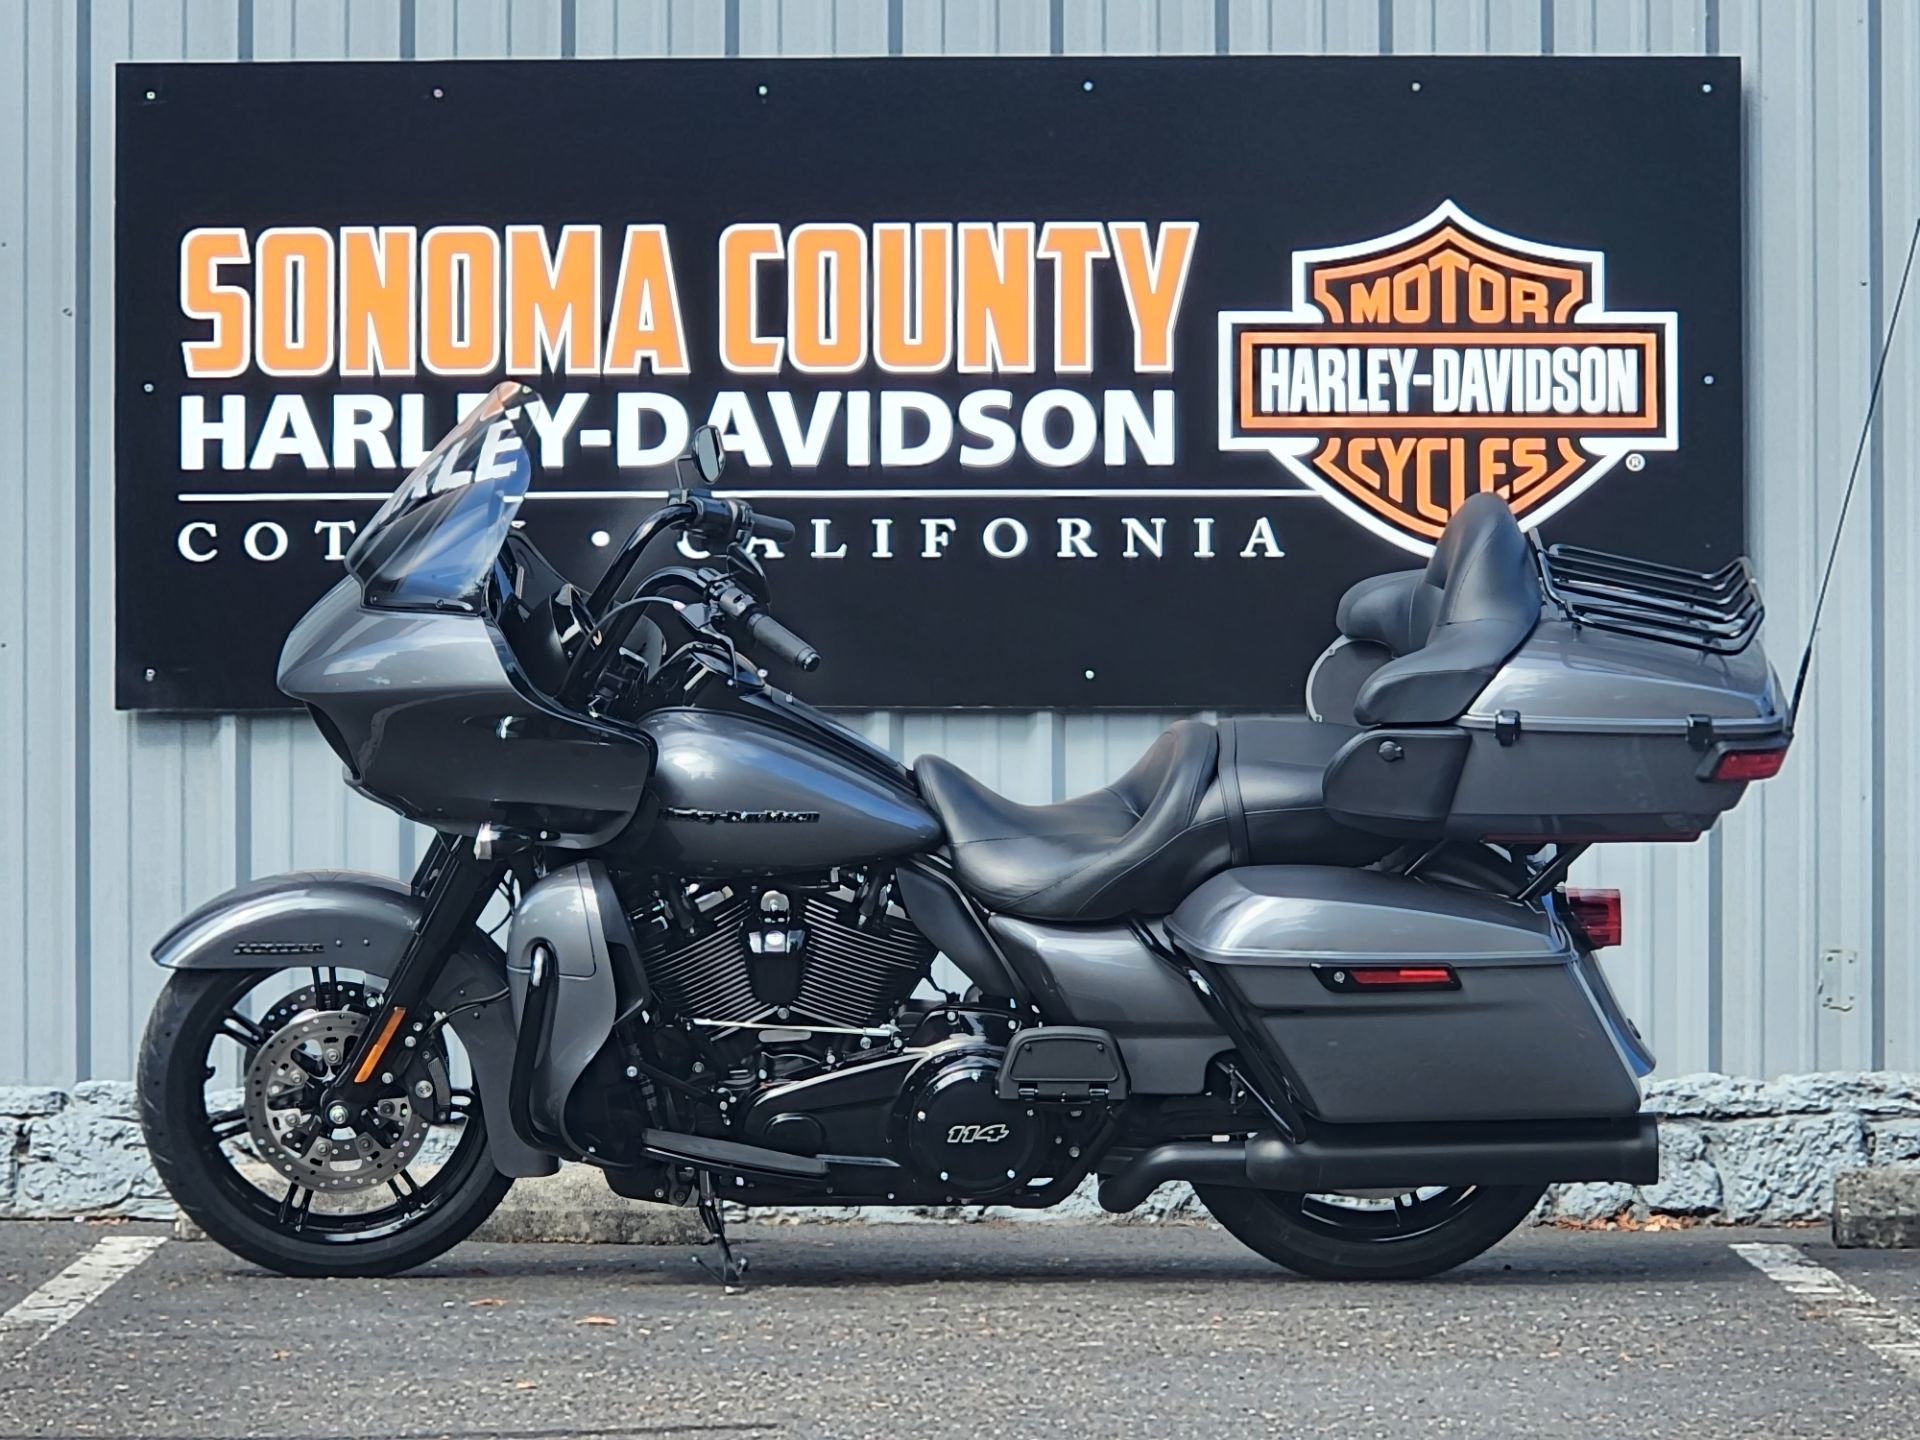 2021 Harley-Davidson Road Glide® Limited in Cotati, California - Photo 3